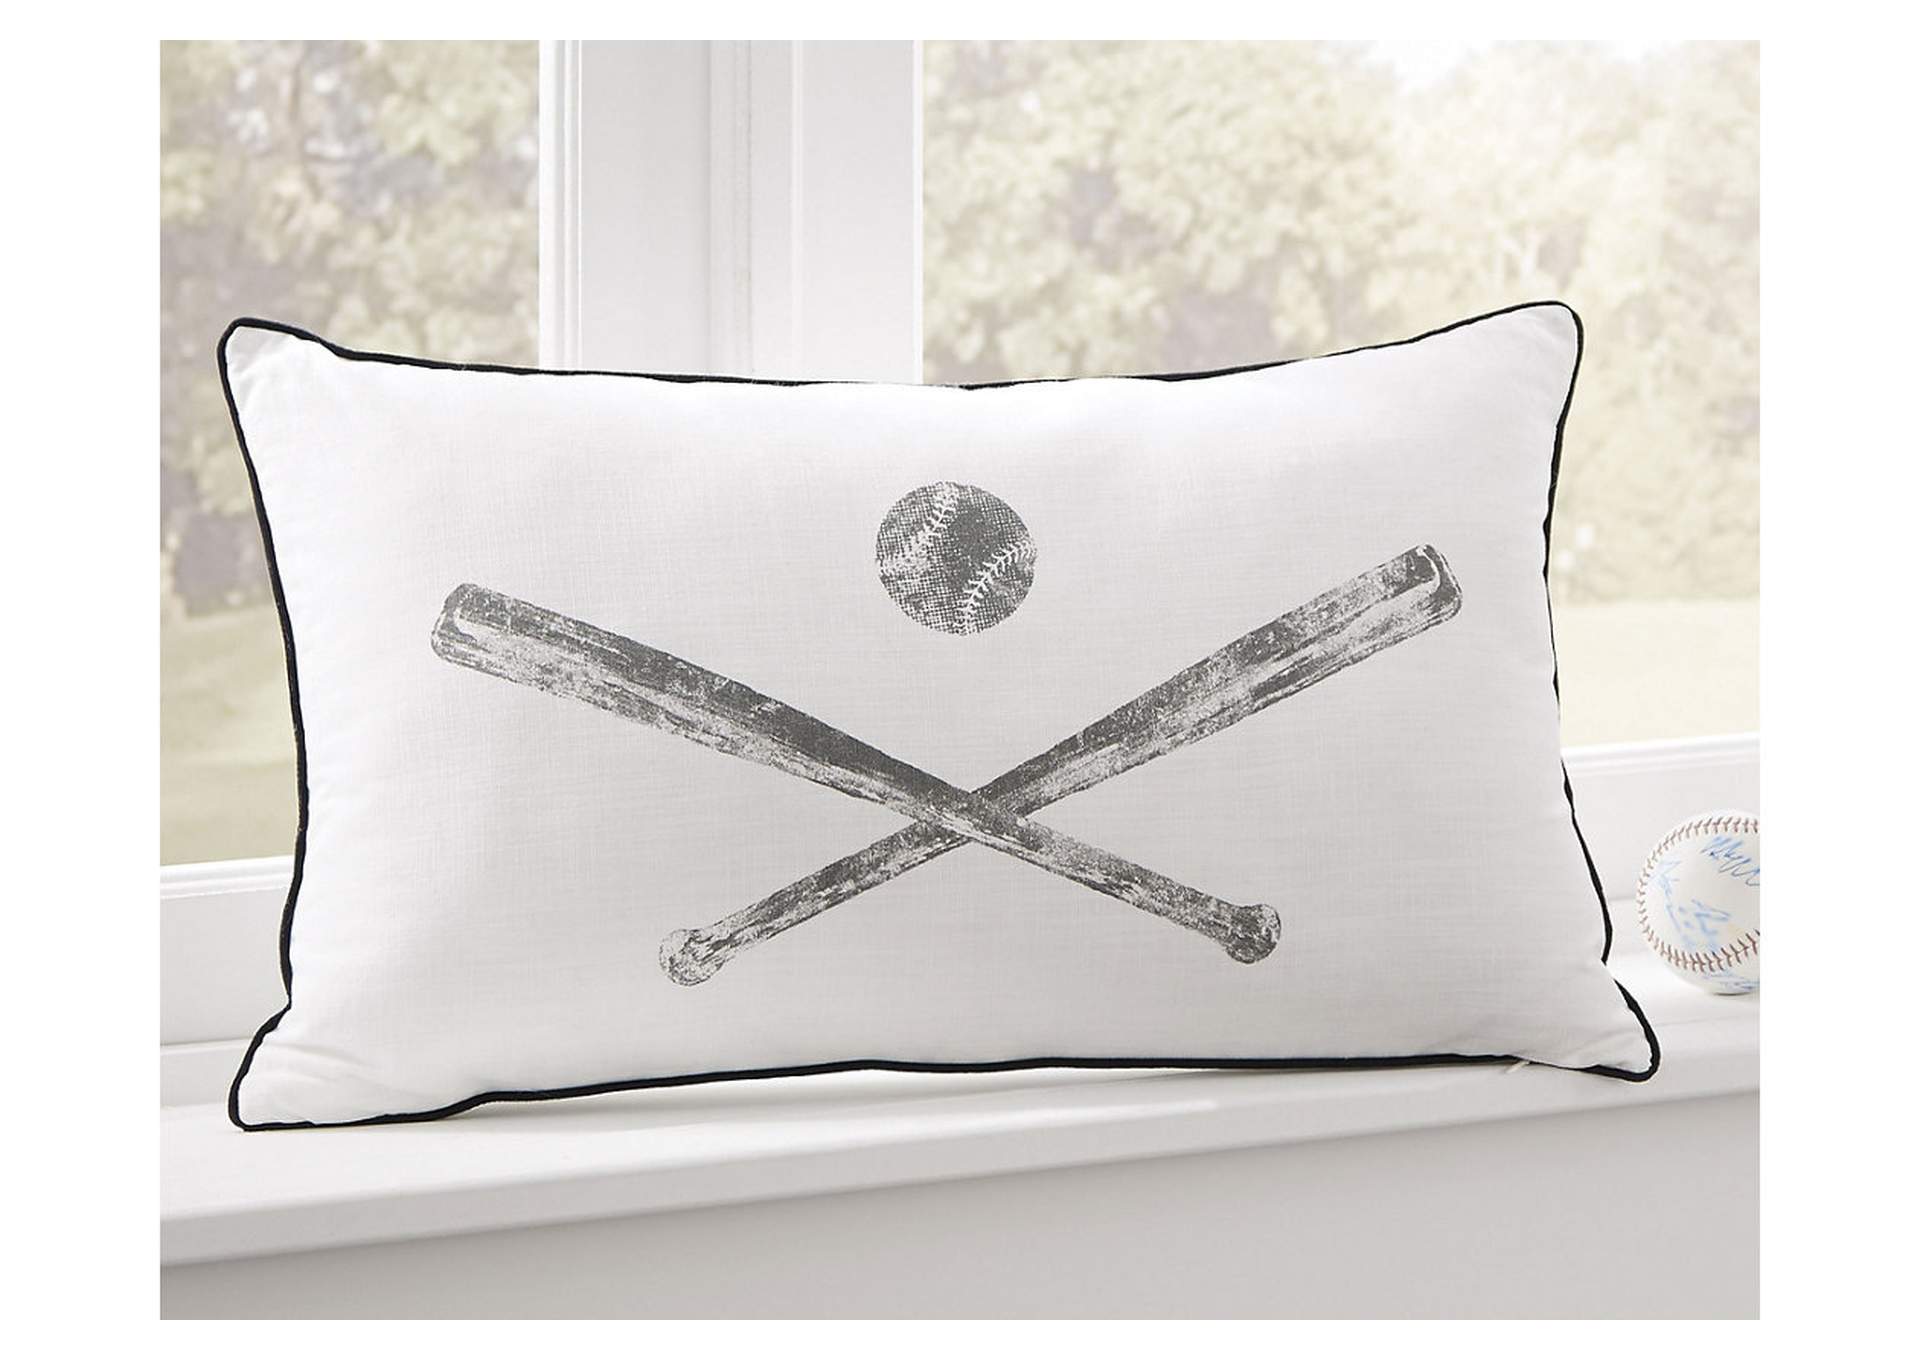 Waman Baseball Design 4 Piece Pillow Set,Direct To Consumer Express